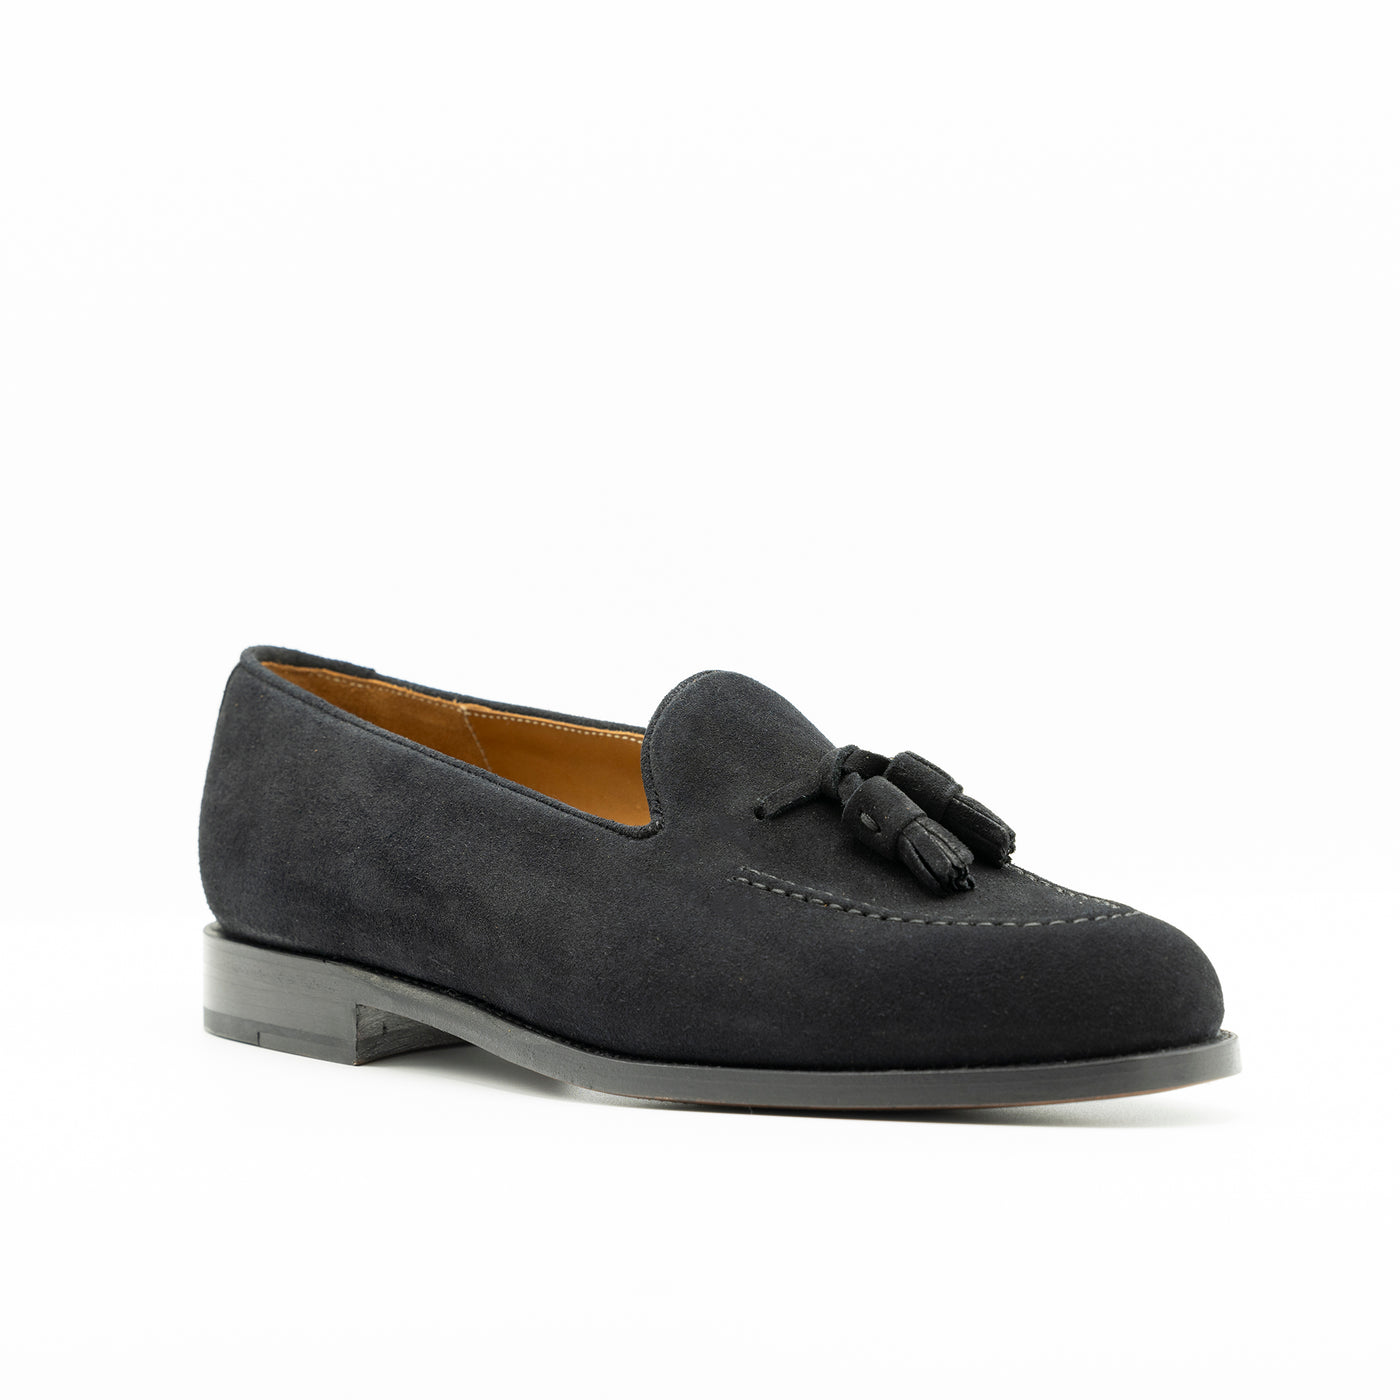 Men's tassel loafer in black suede. Set on goodyear welted soles. 